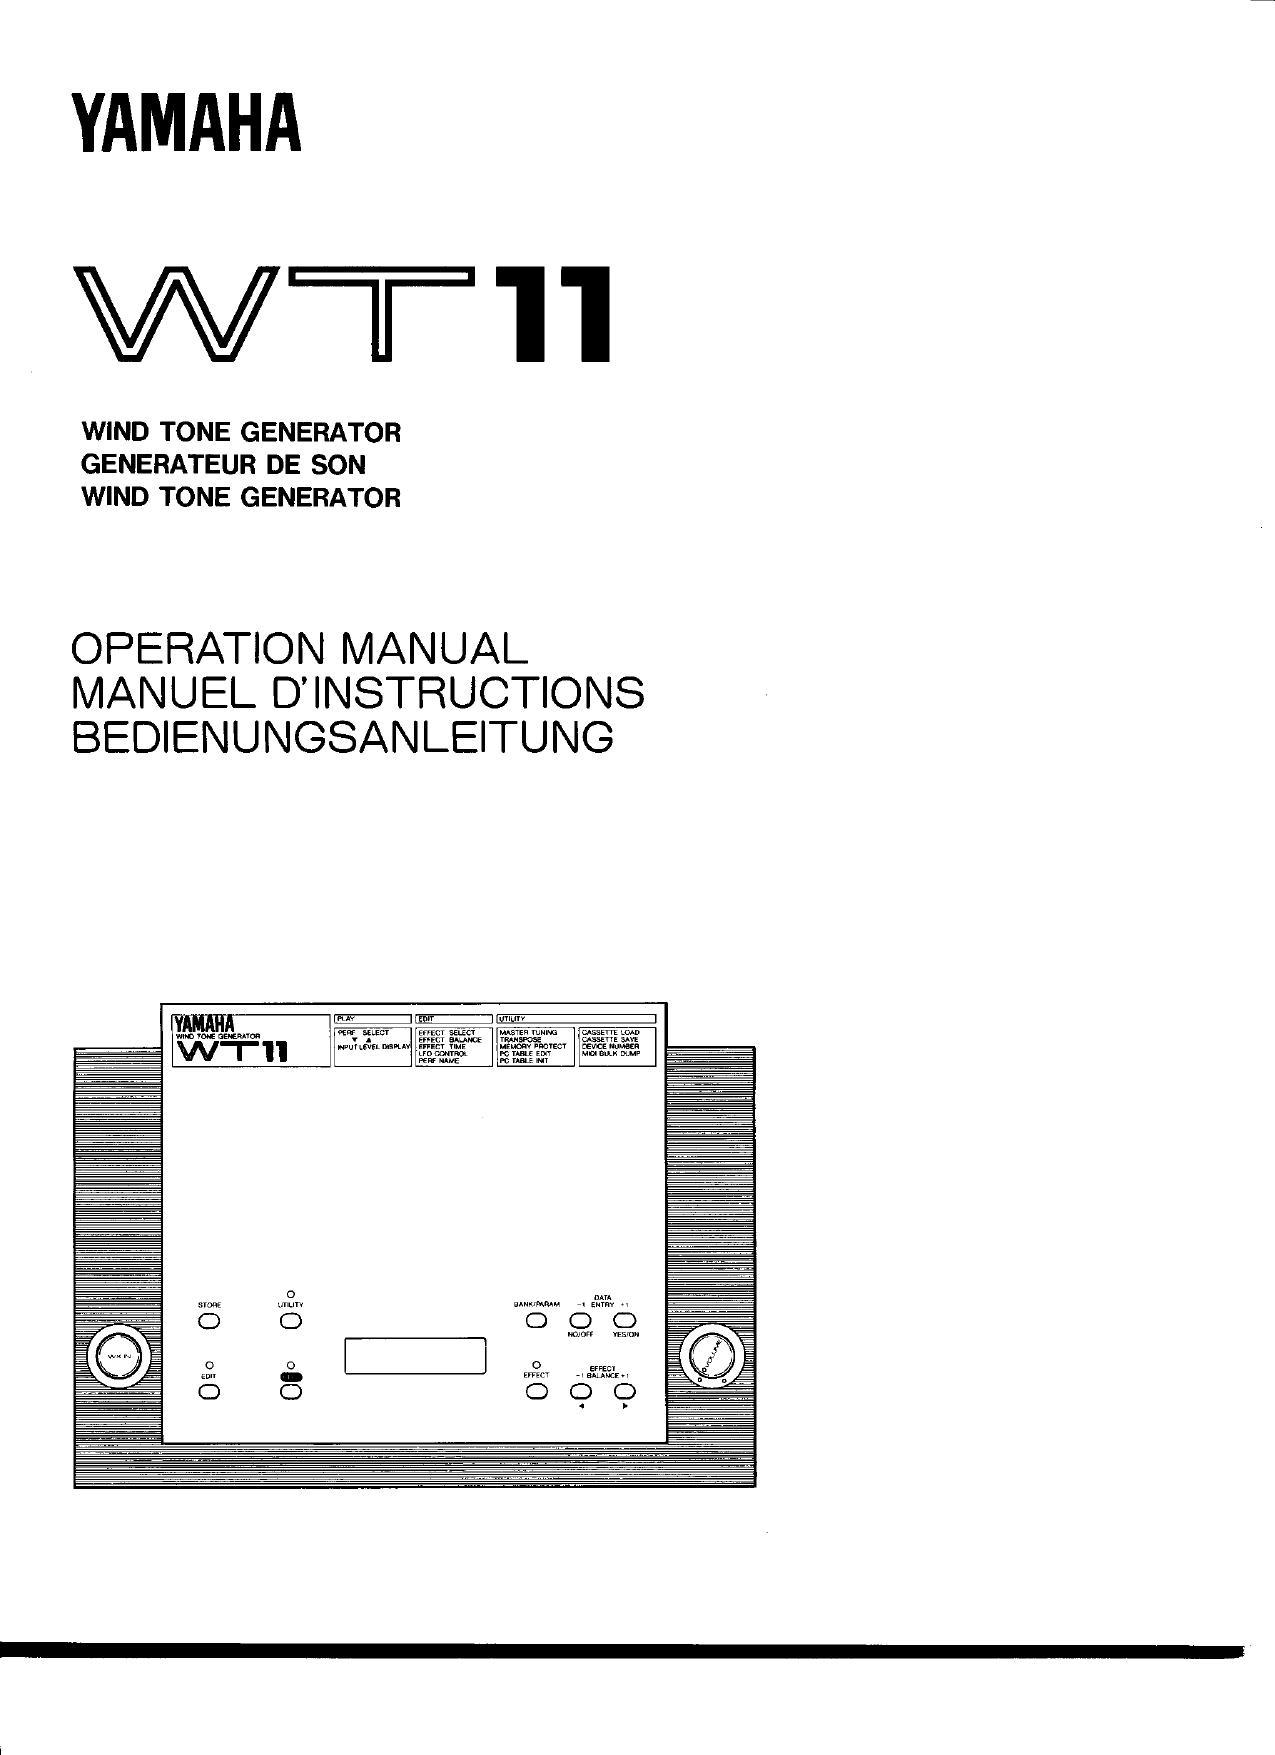 yamaha-wt11-wind-tone-generator-operation-manual.pdf